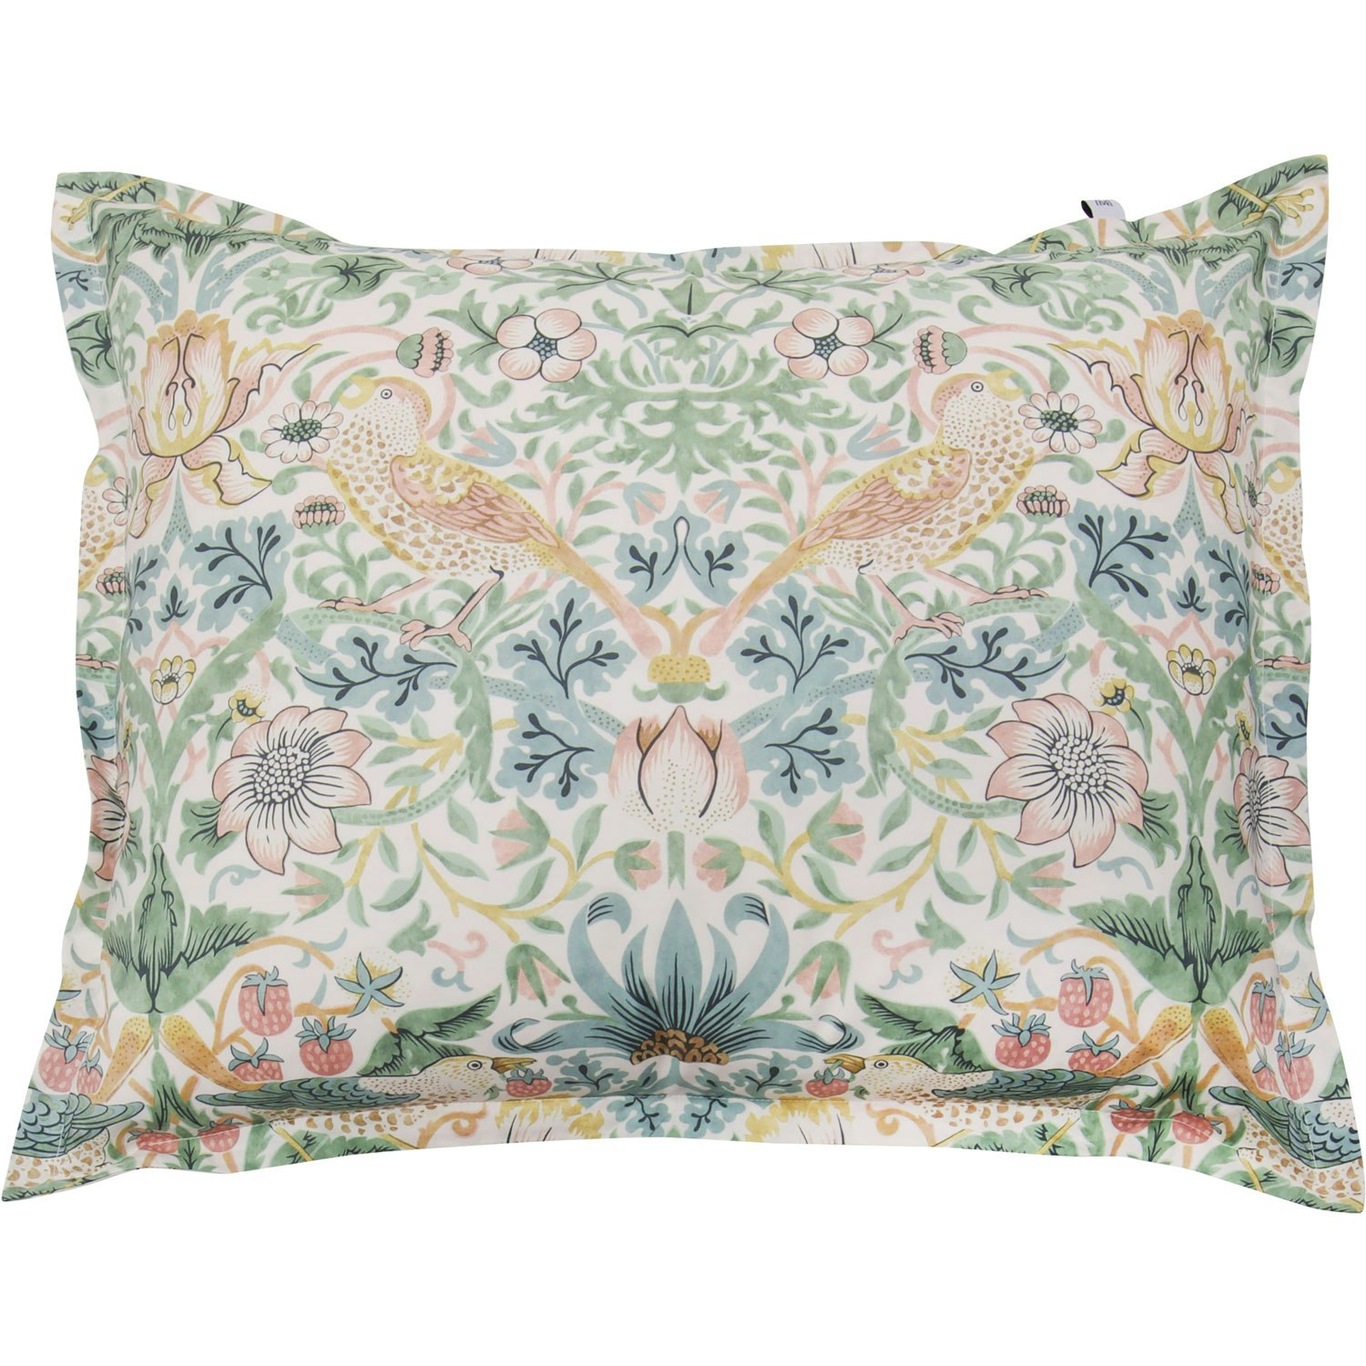 Morris & Co. Strawberry Thief Pillowcase, 50x70 cm